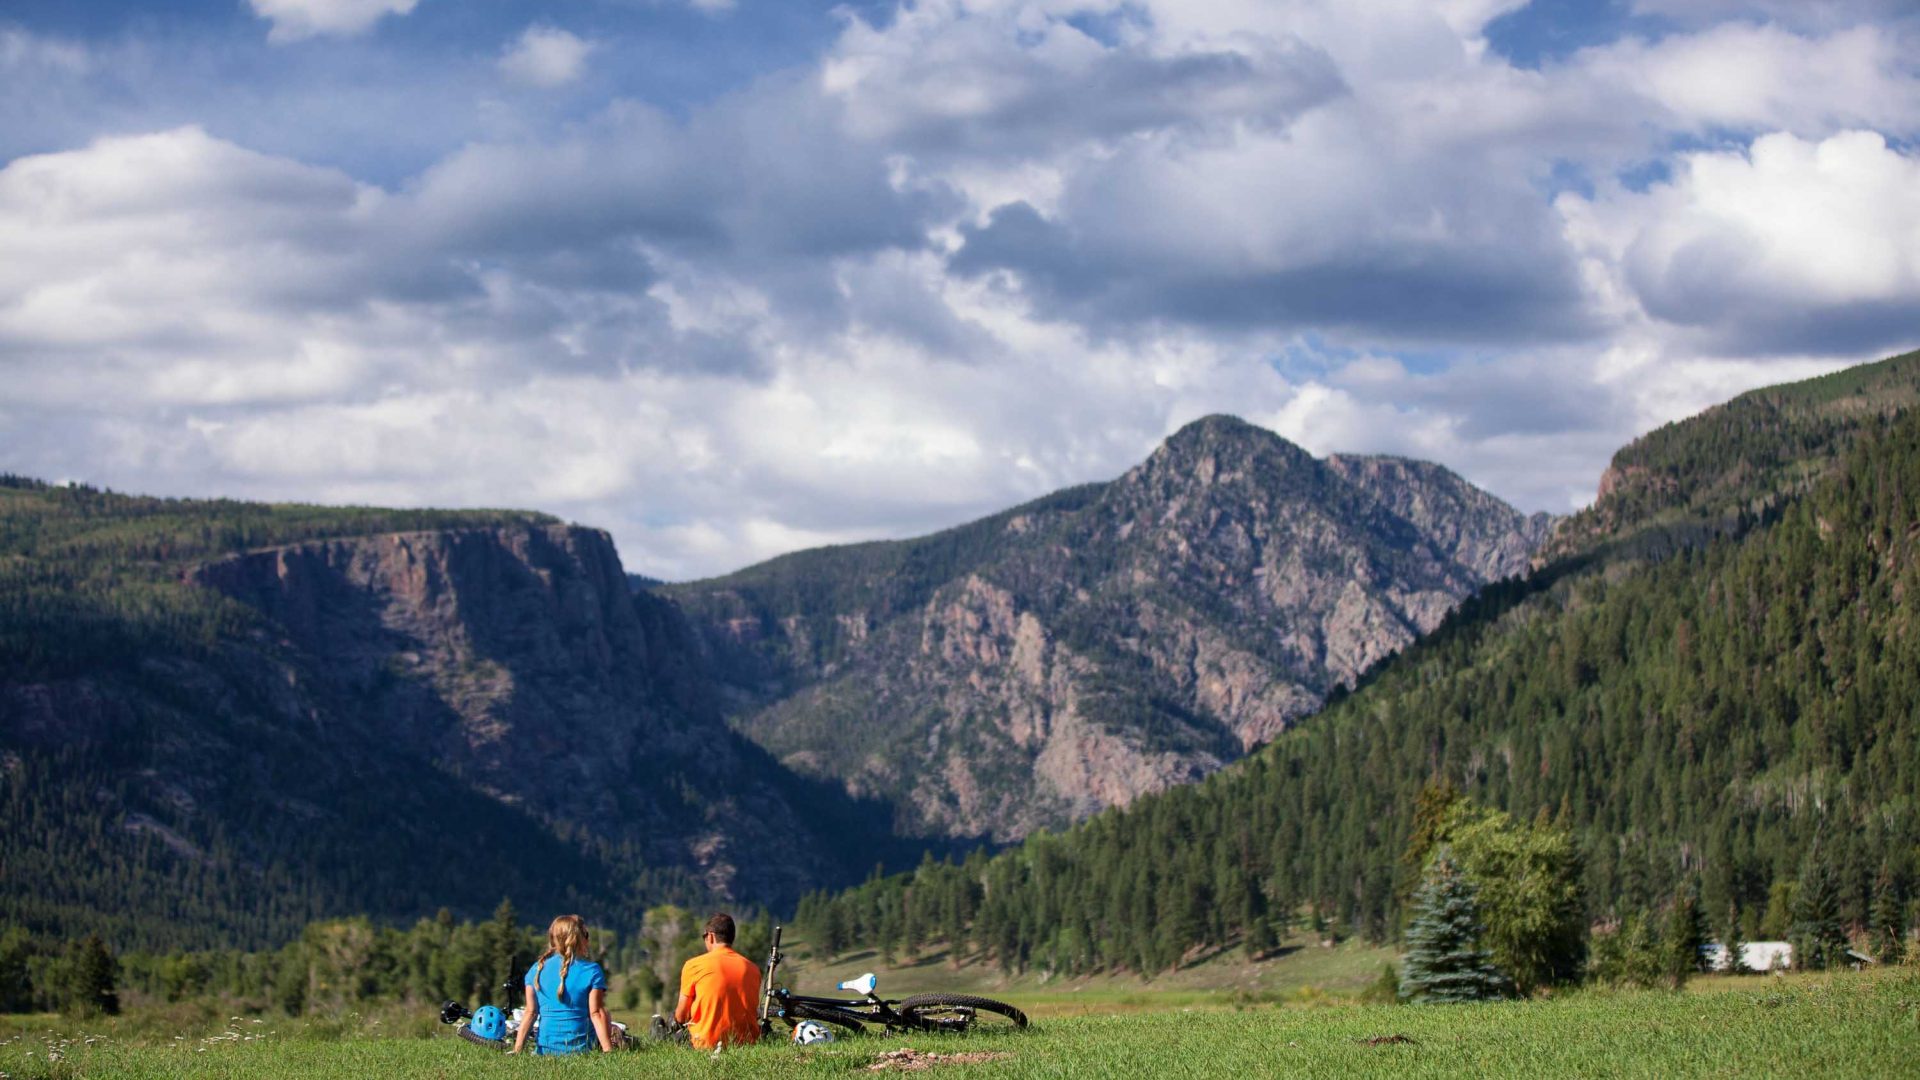 Mountain bikers rest in the valley near Durango.